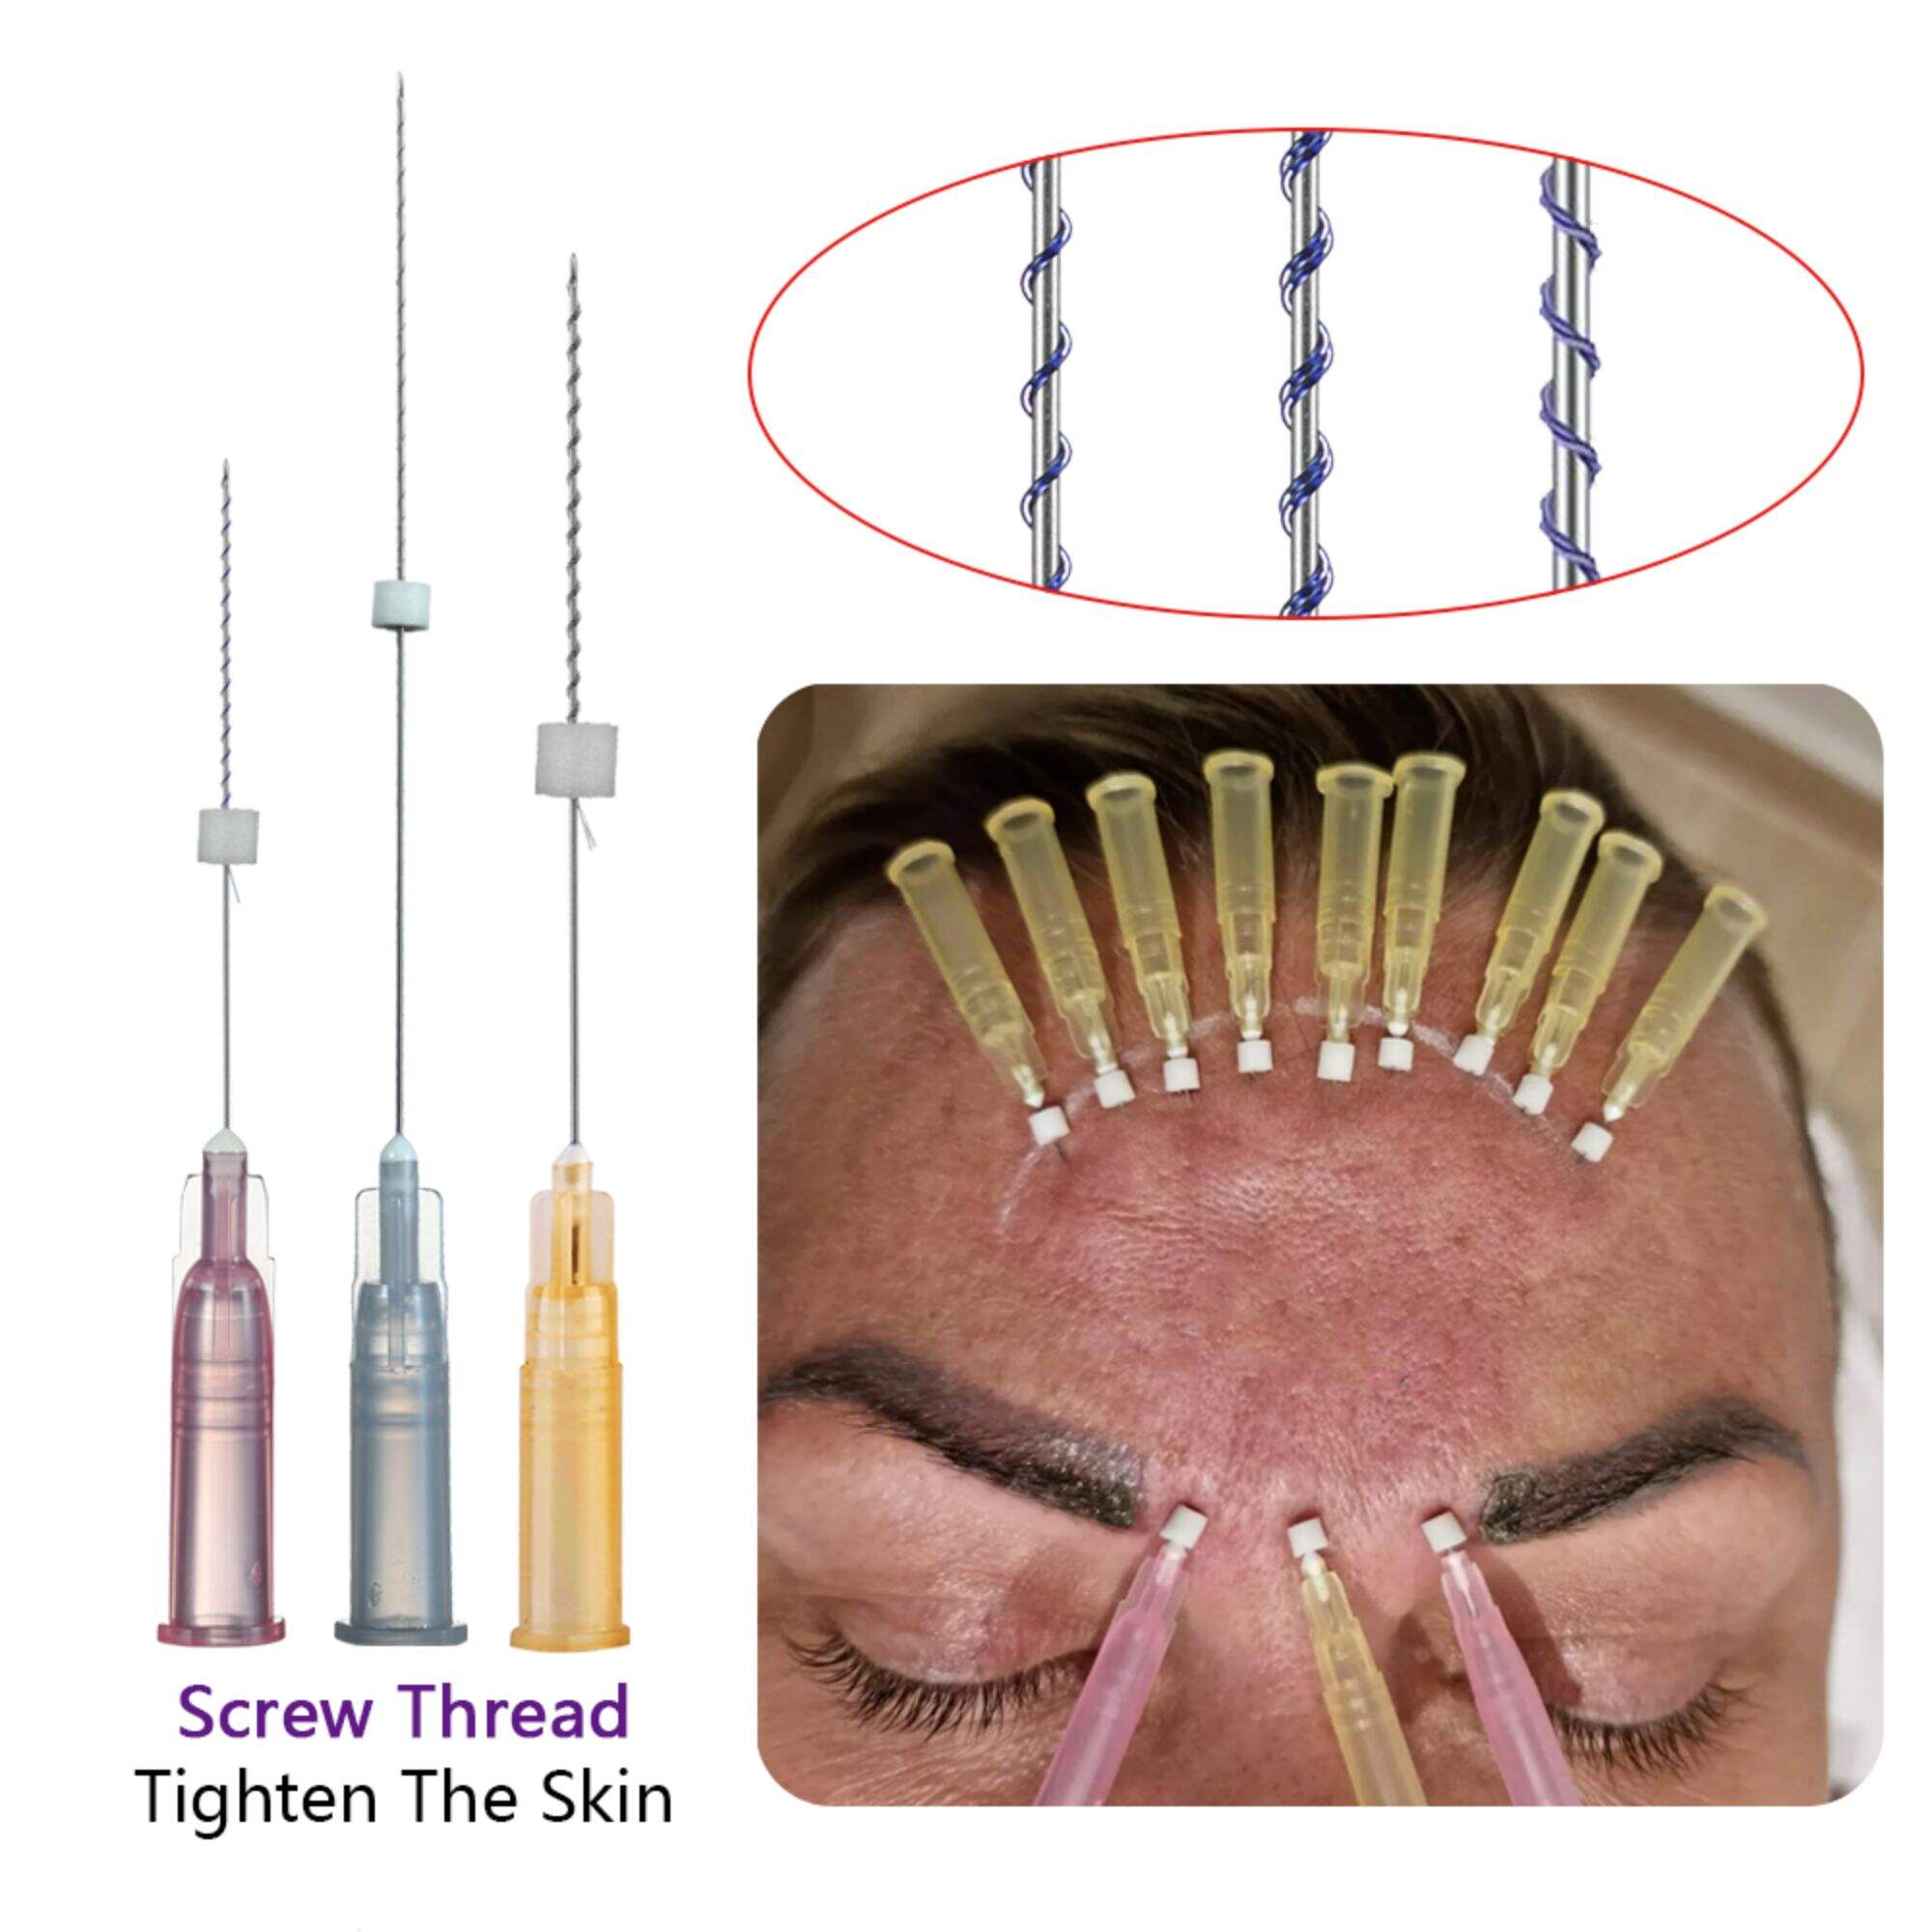 26g 27g 29g 30g Twist Hilos Tensores Sharp Needle Screw Thread Face Lift PLLA